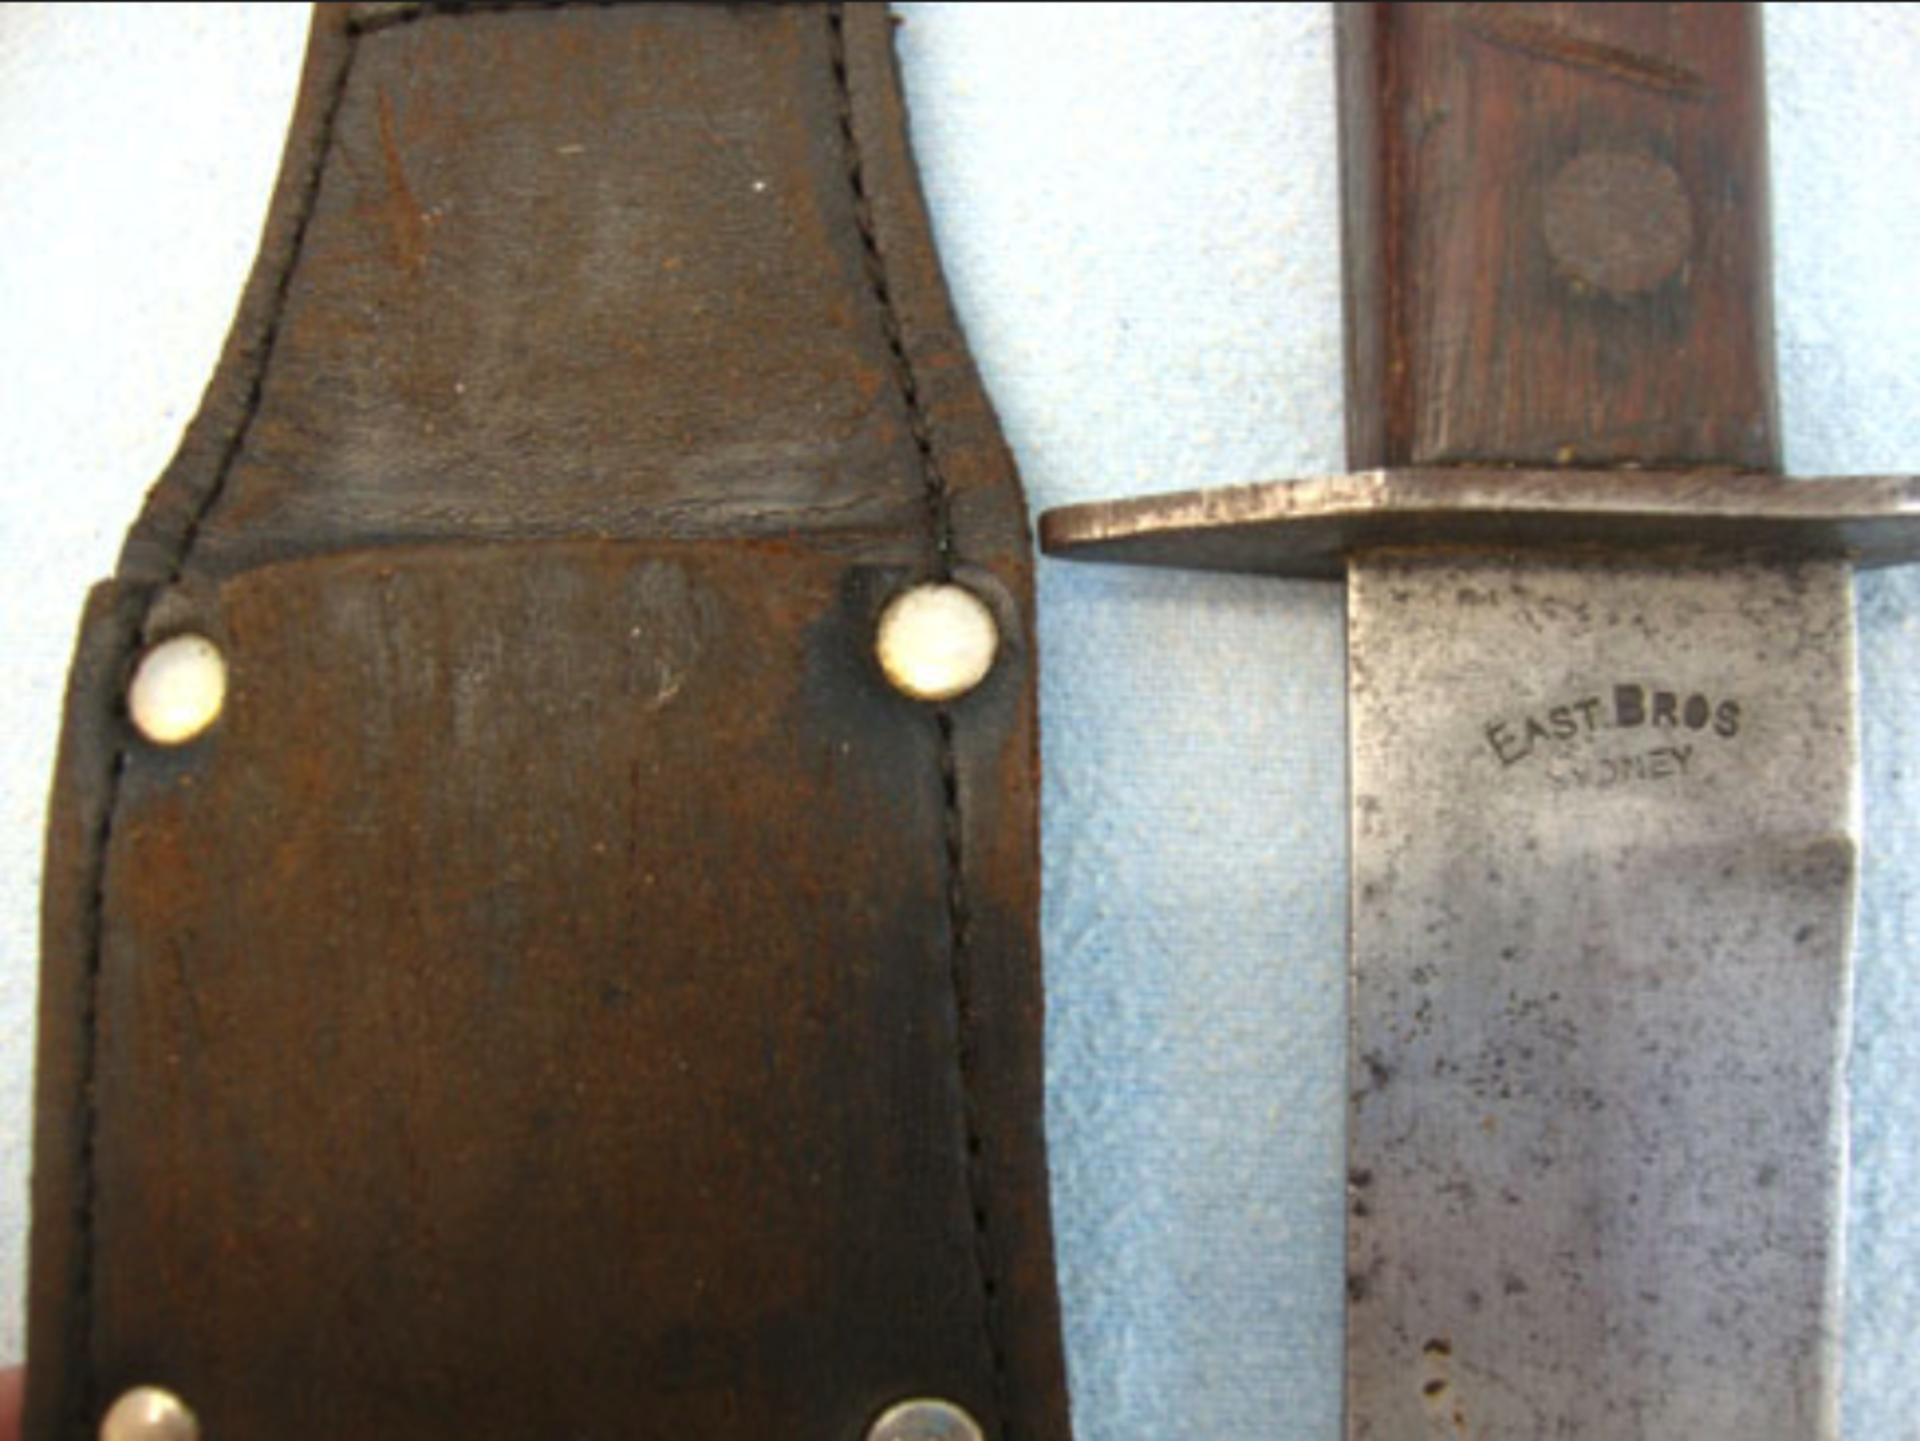 WW2 Australian Wood Gripped Fighting Knife & Leather Sheath By East Bros. Sydney. - Image 2 of 3